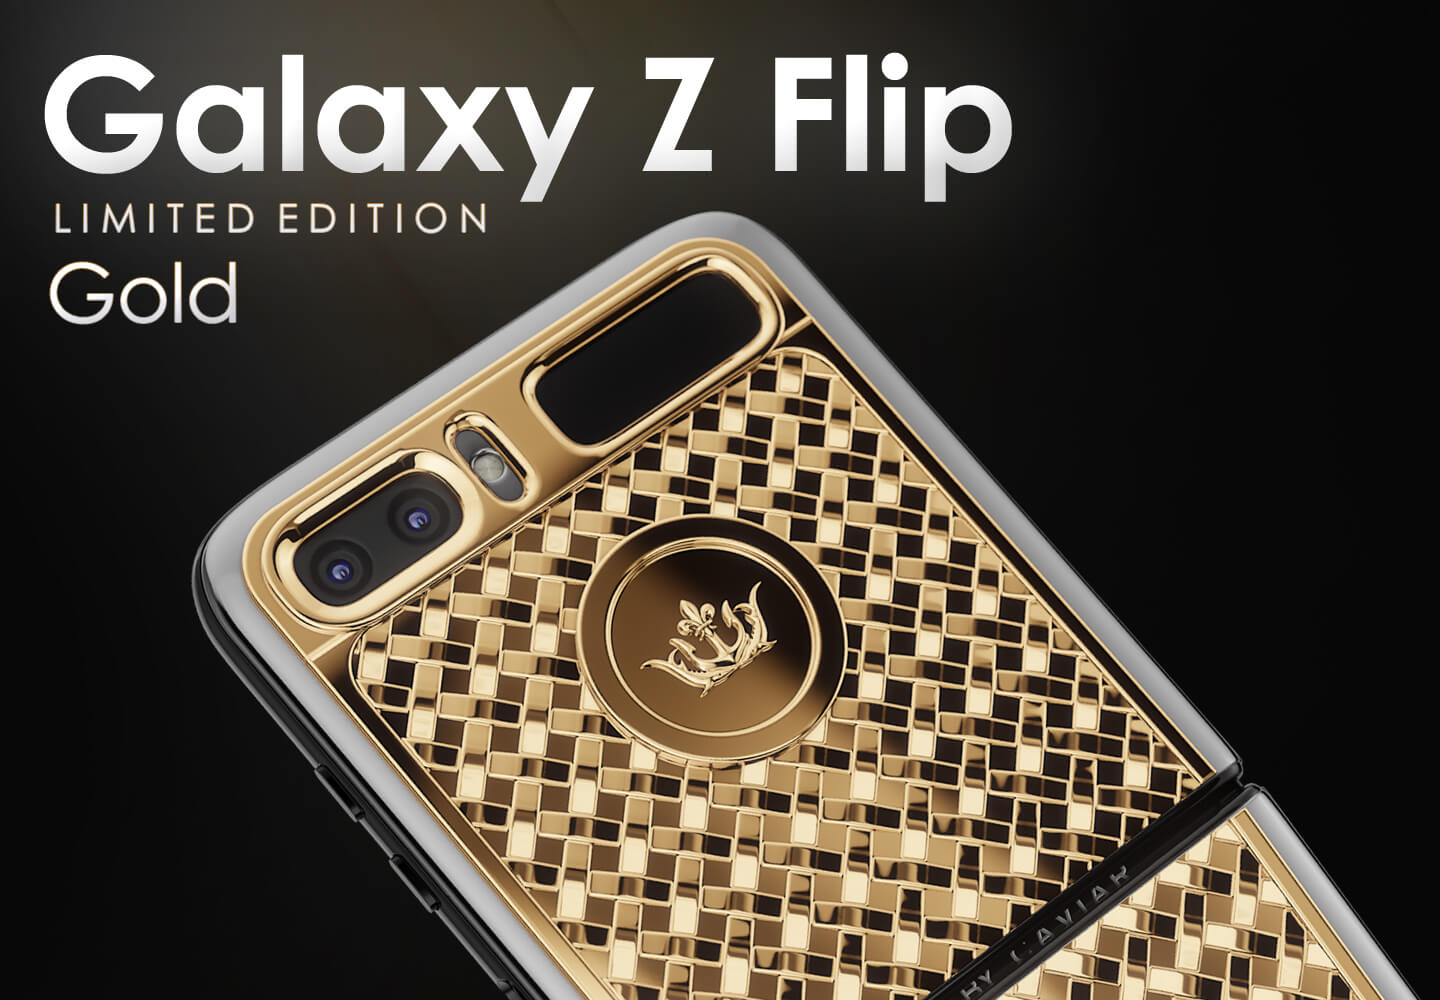 Samsung Galaxy Z Flip Gold